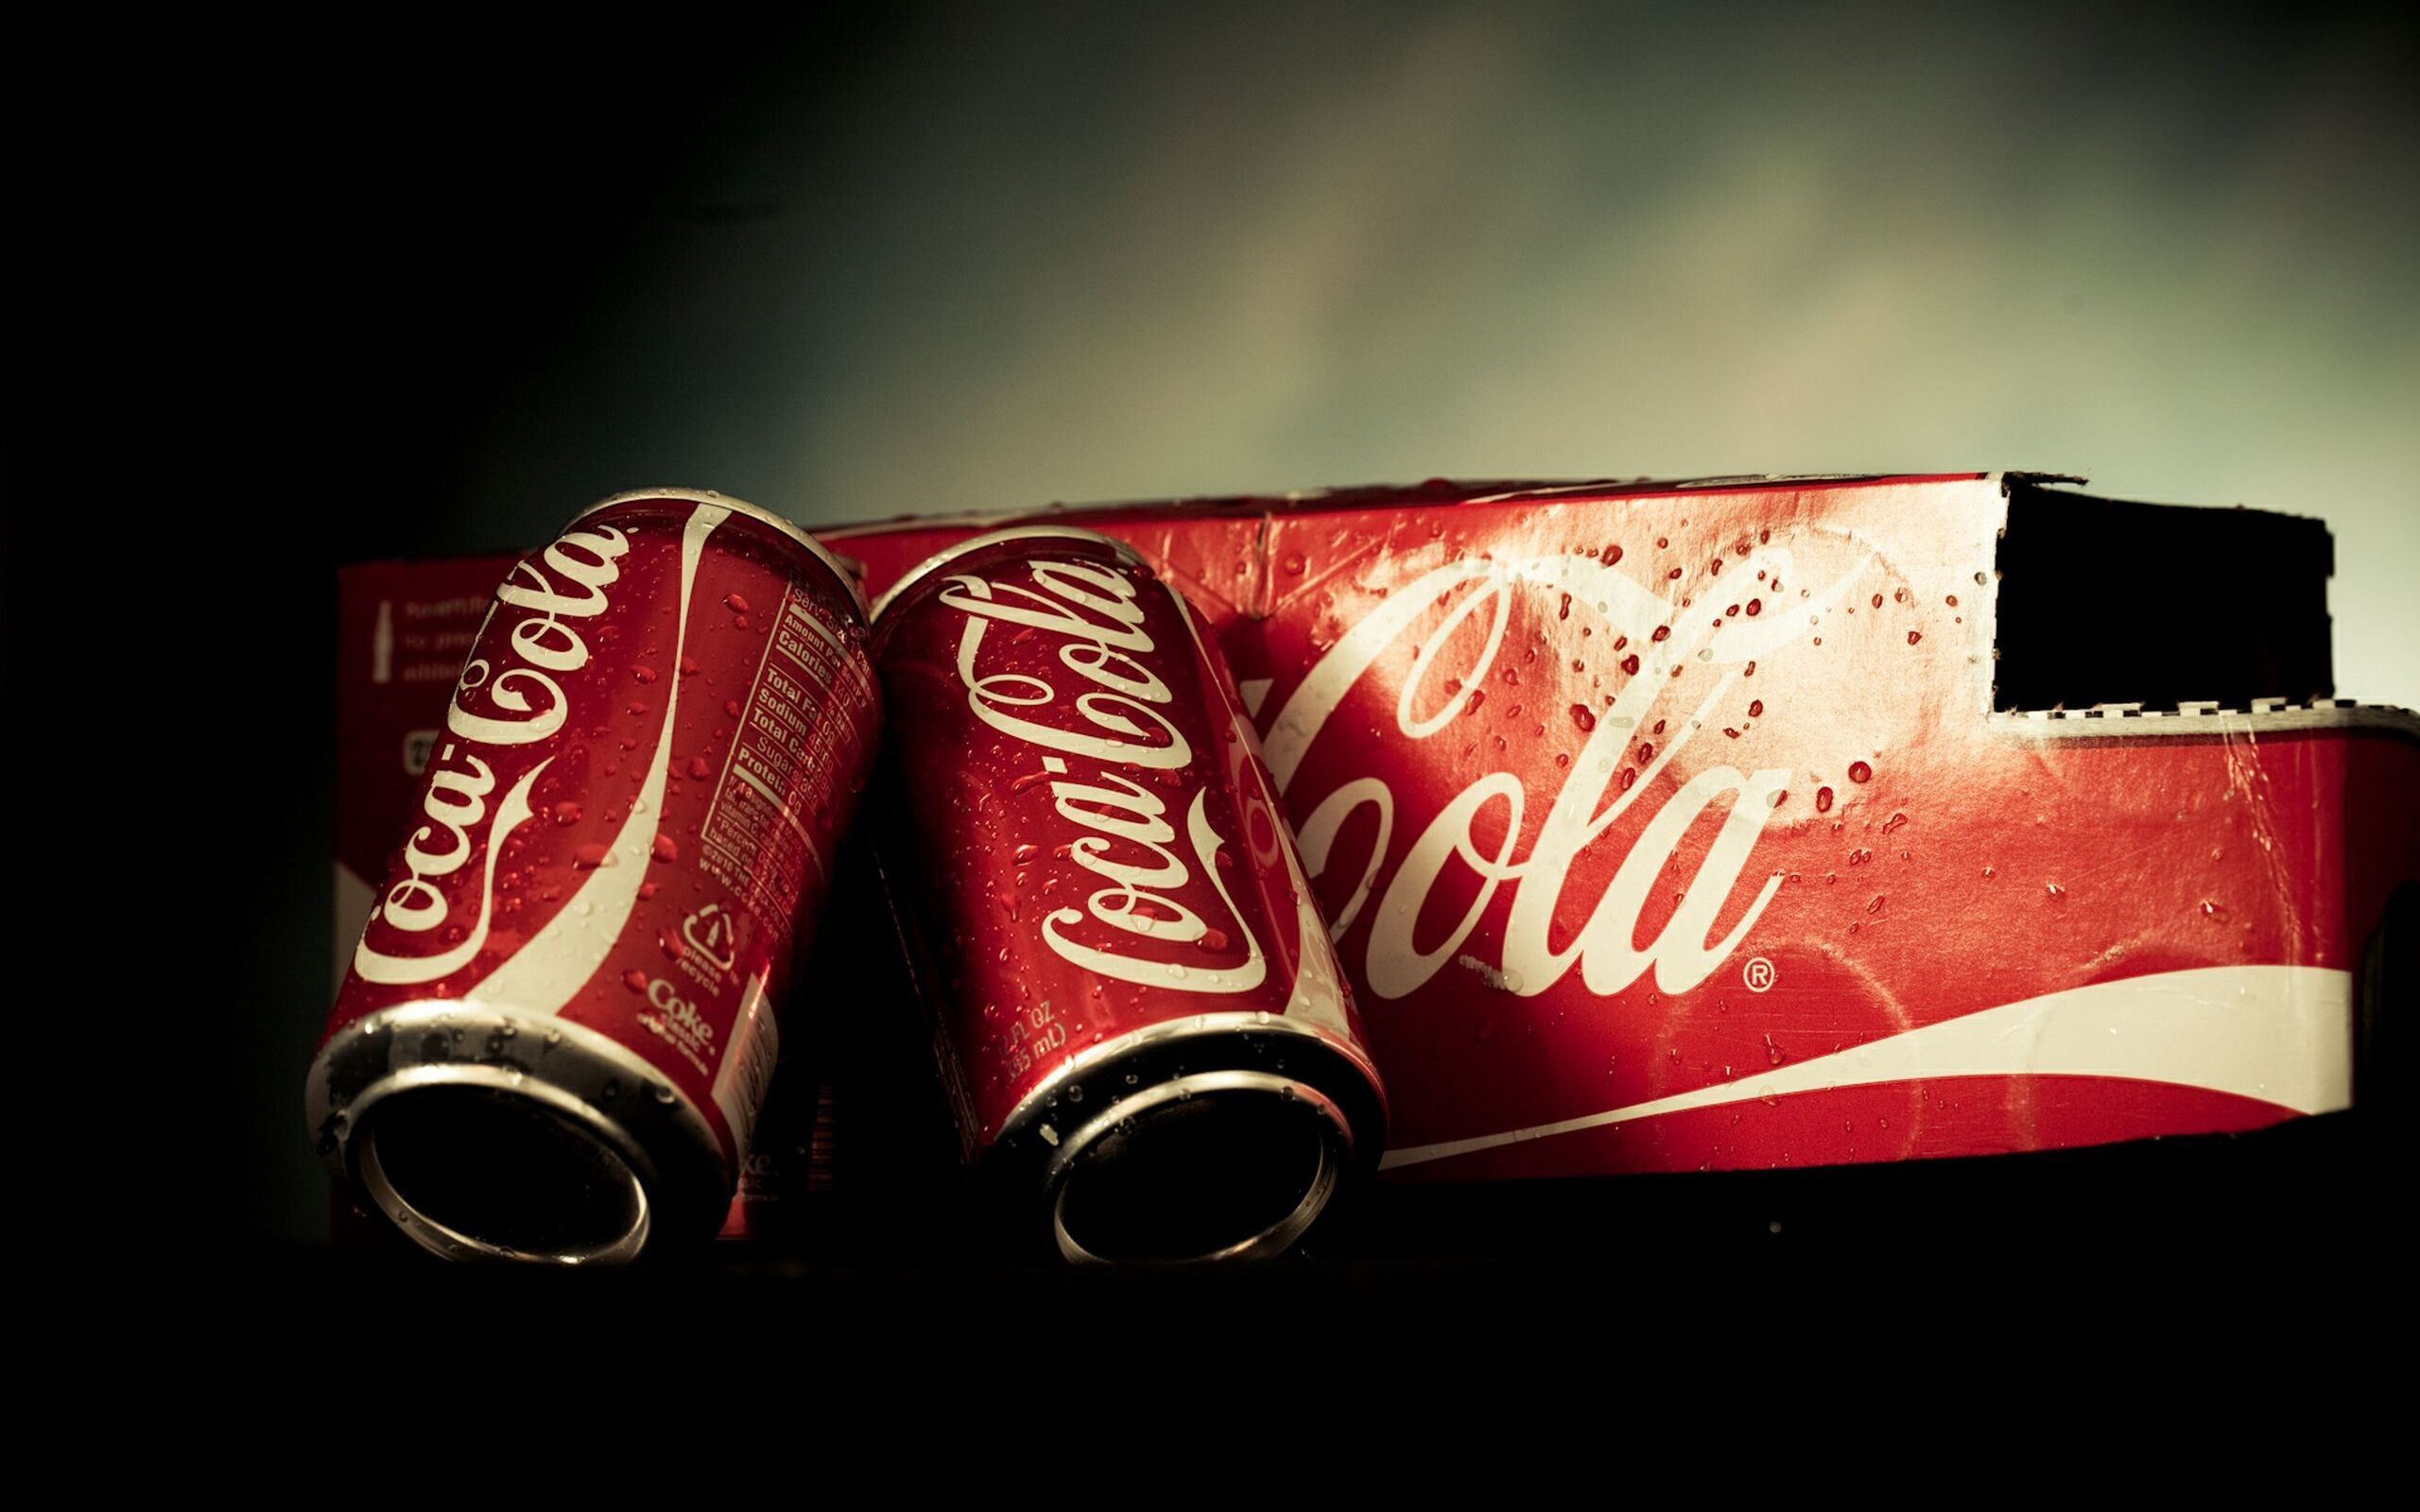 2560x1600 Coca Cola Cans Wallpaper Background 61362